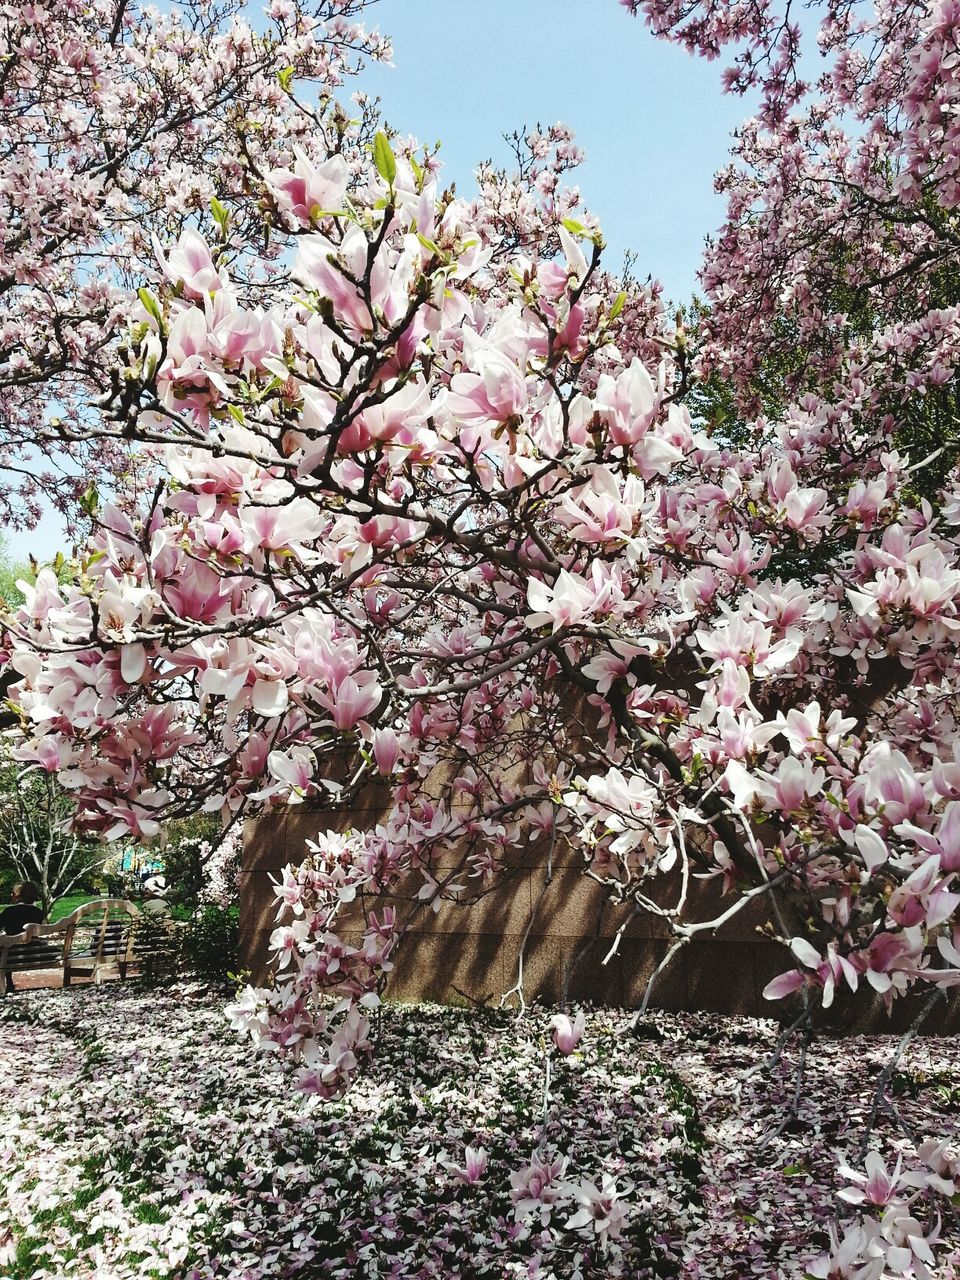 Magnolias blooming in park